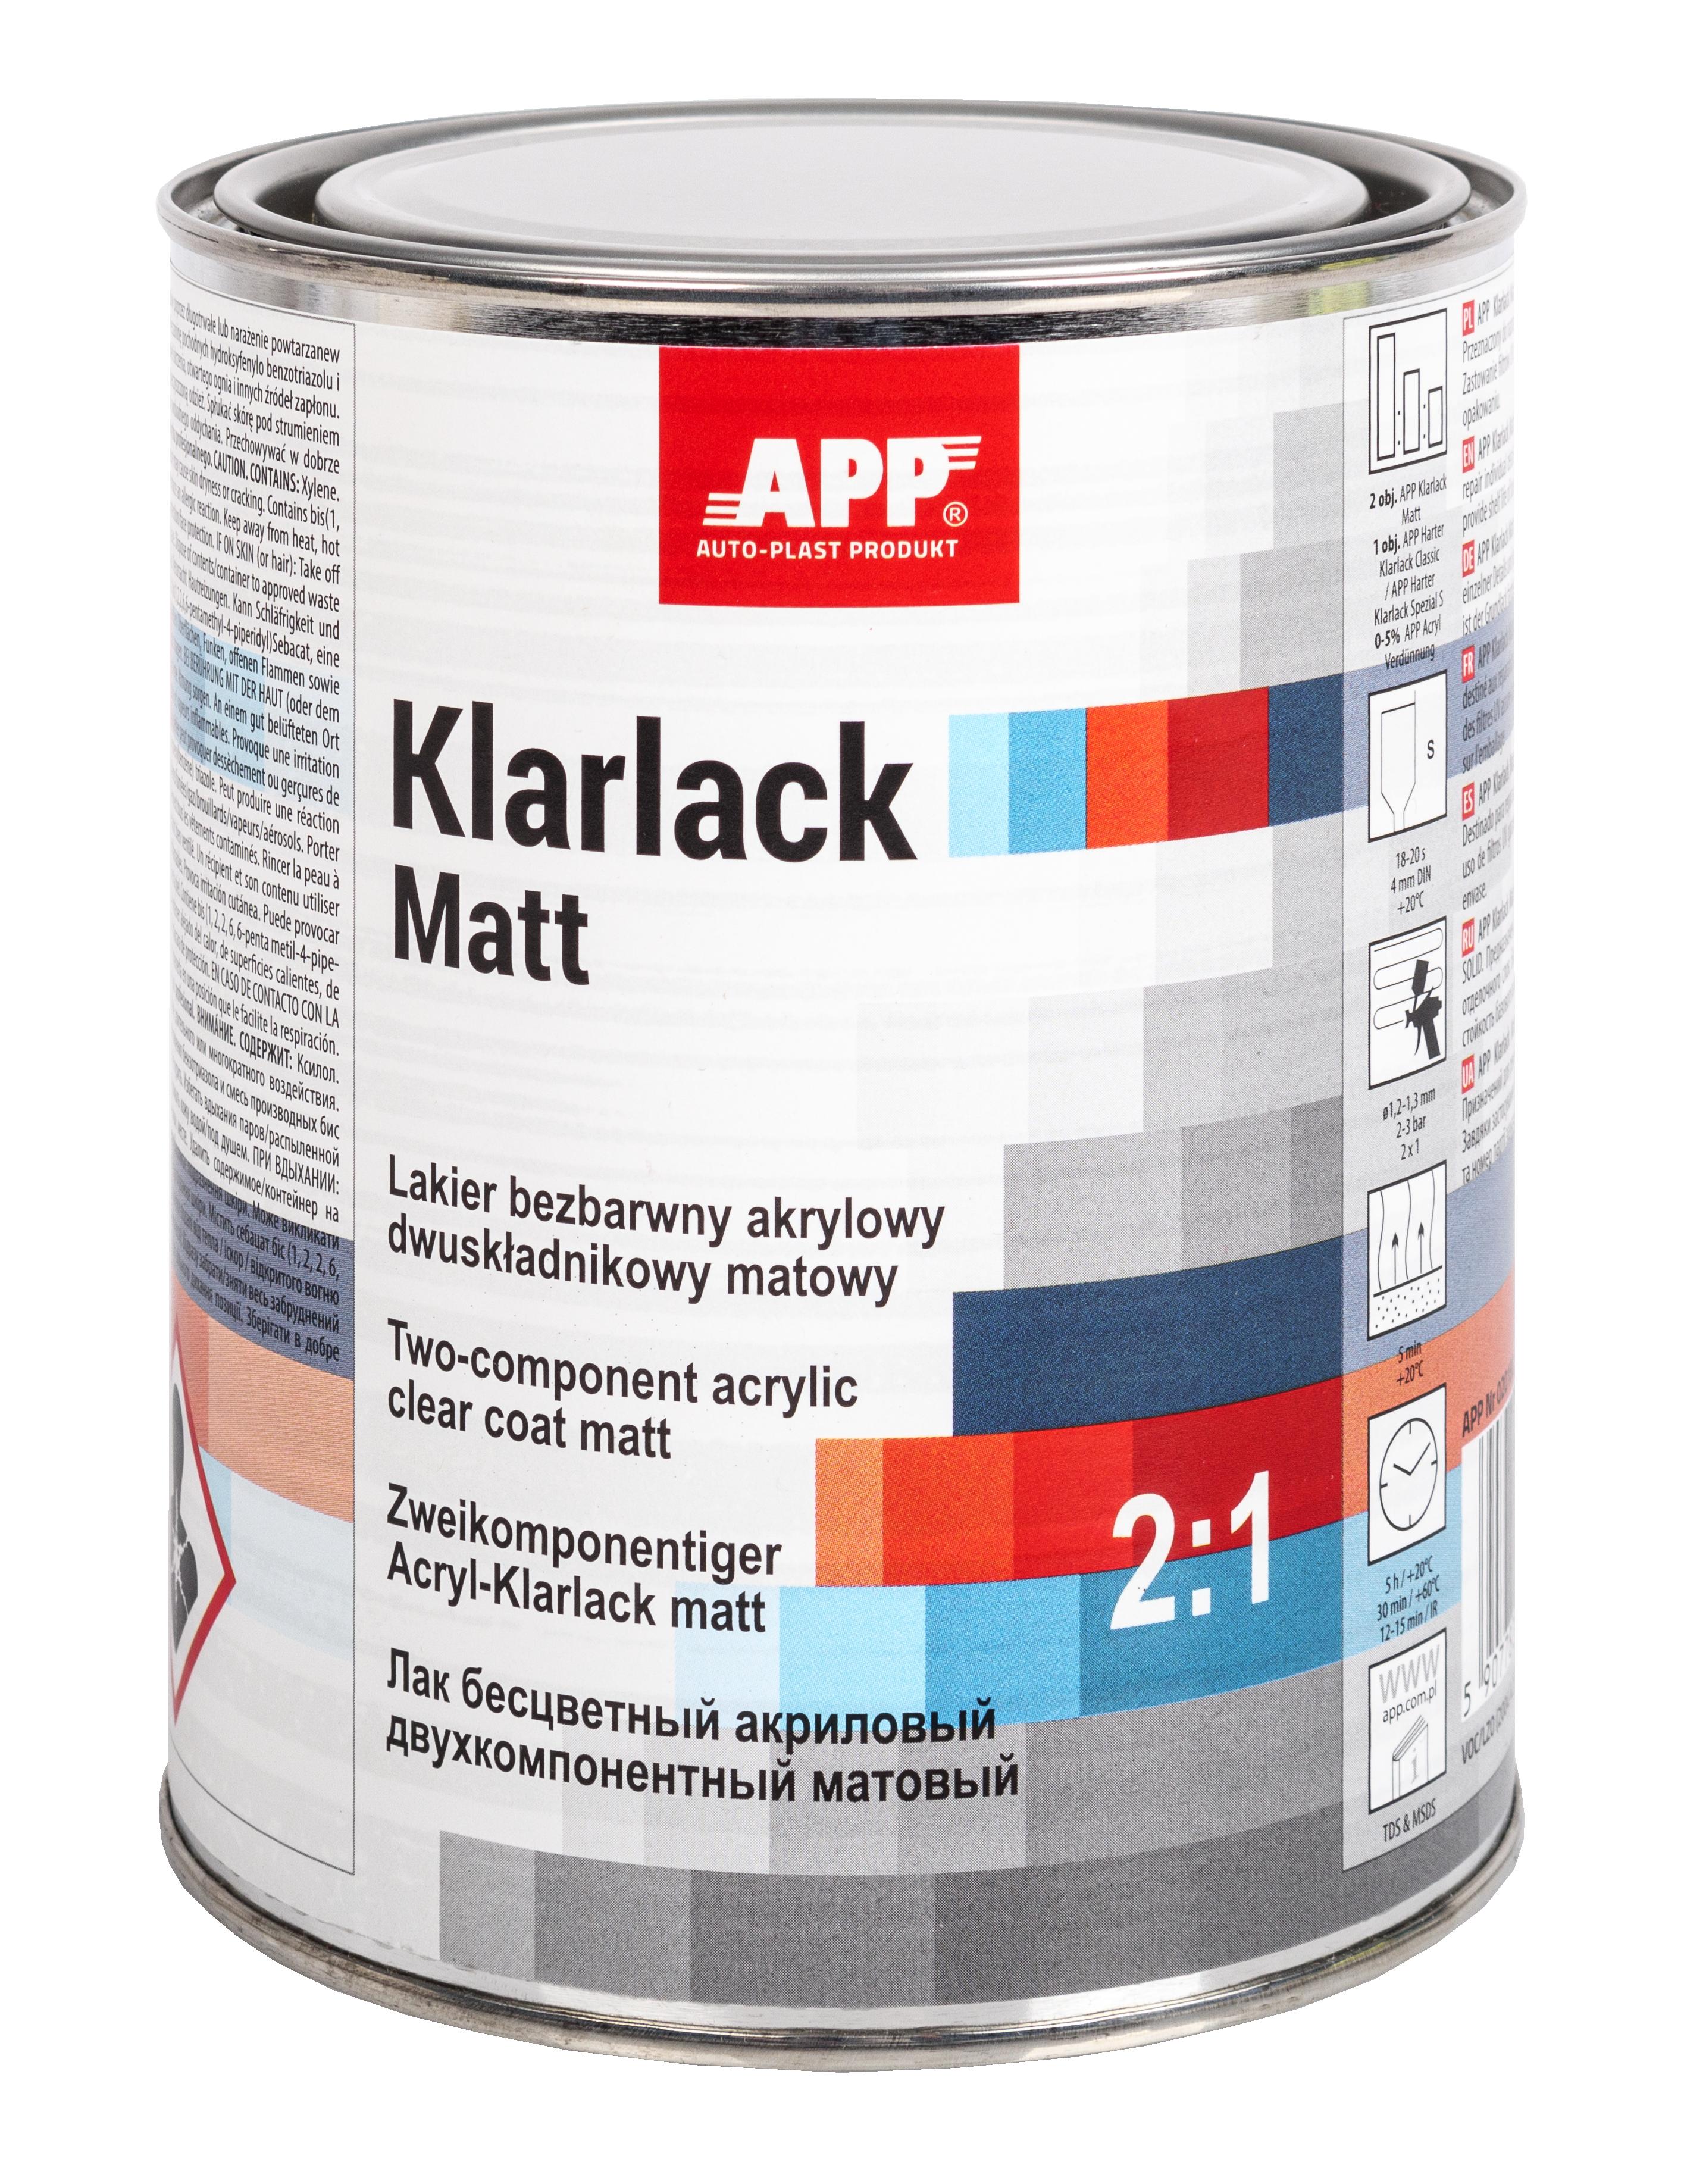 APP 020180 HS Acryl Matt Klarlack 2:1 Acrylklarlack matt 1,0 L | Clearcoat Lack Mattlack 2K-Klarlack